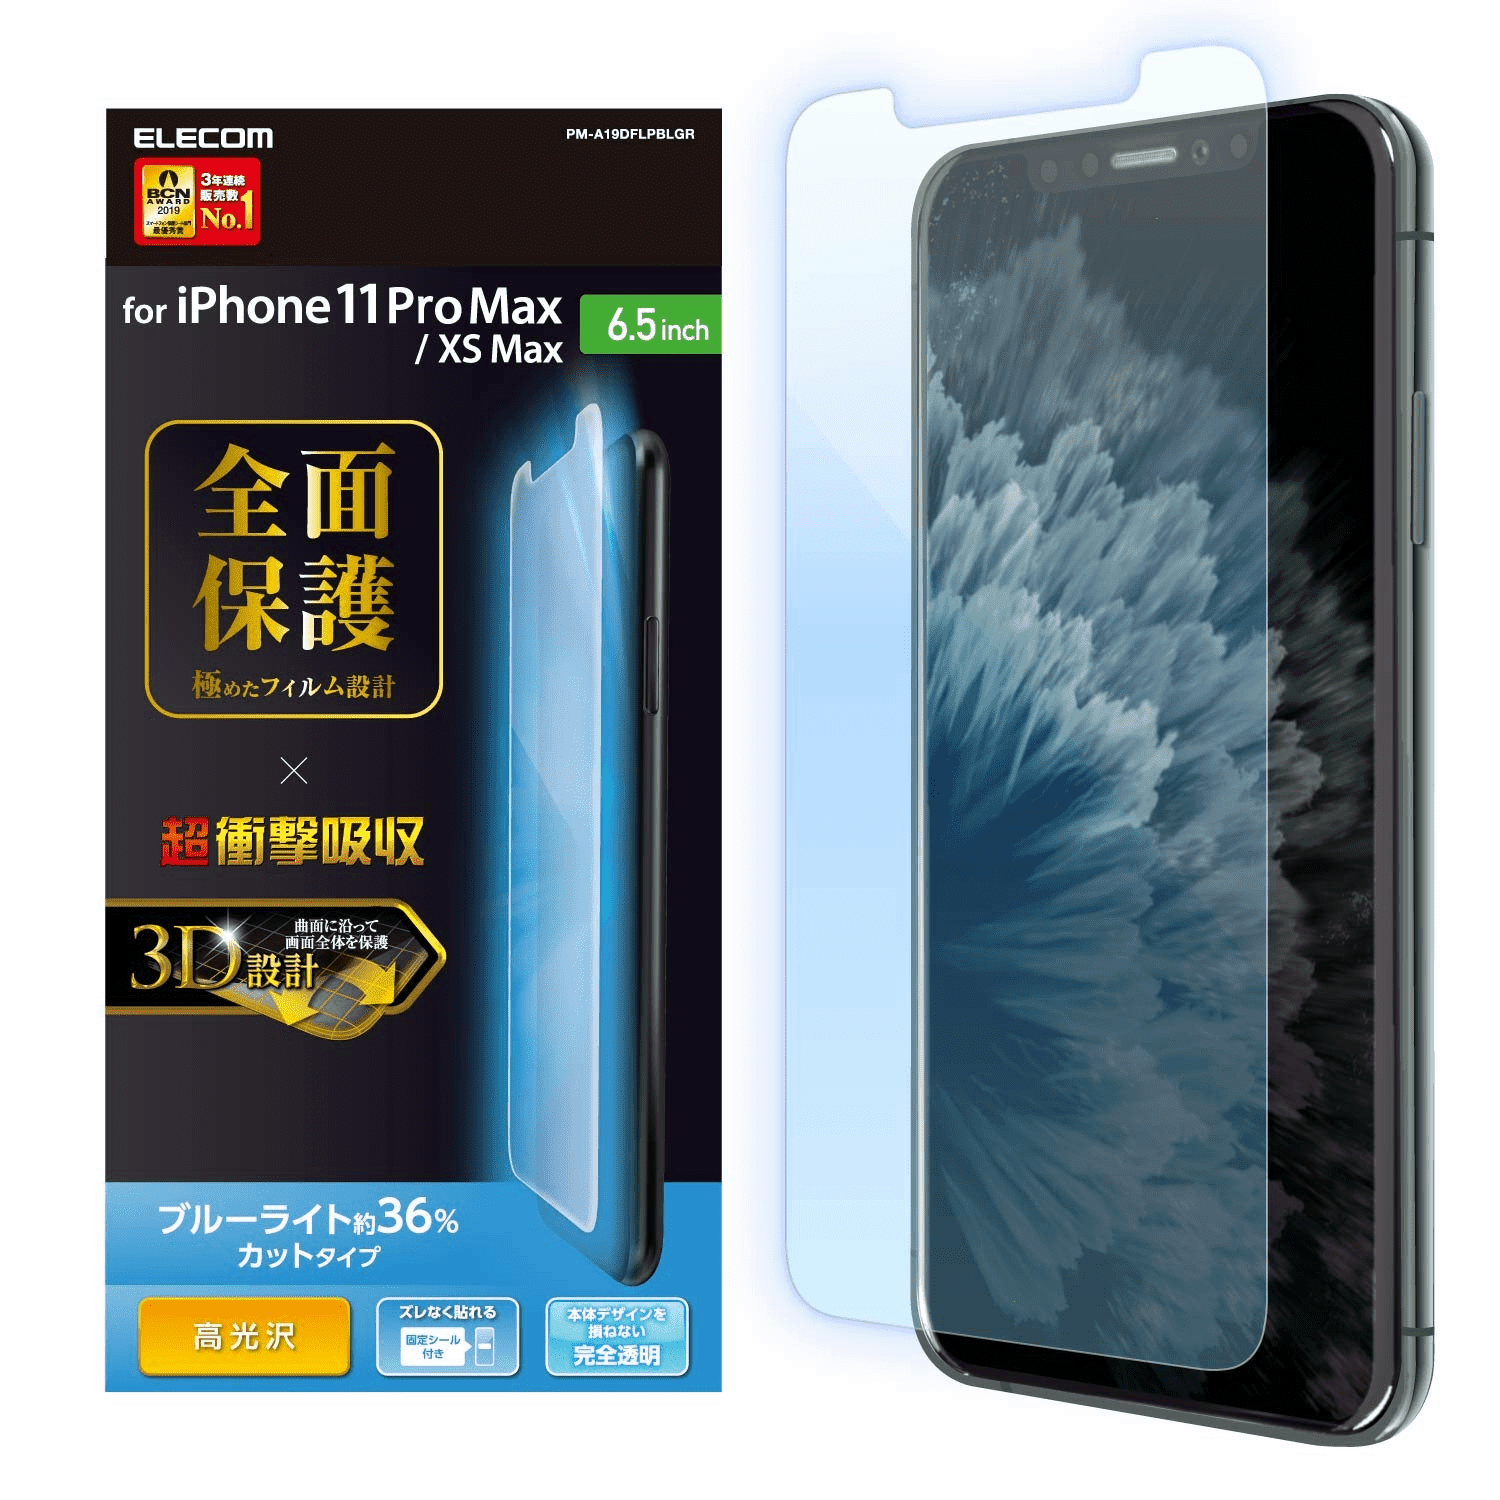 Pm A19dflpgrbk Iphone 11 Pro Max ﾌﾙｶﾊﾞｰﾌｨﾙﾑ 衝撃吸収 防指紋 ﾌﾞﾗｯｸ エレコム Misumi Vona ミスミ